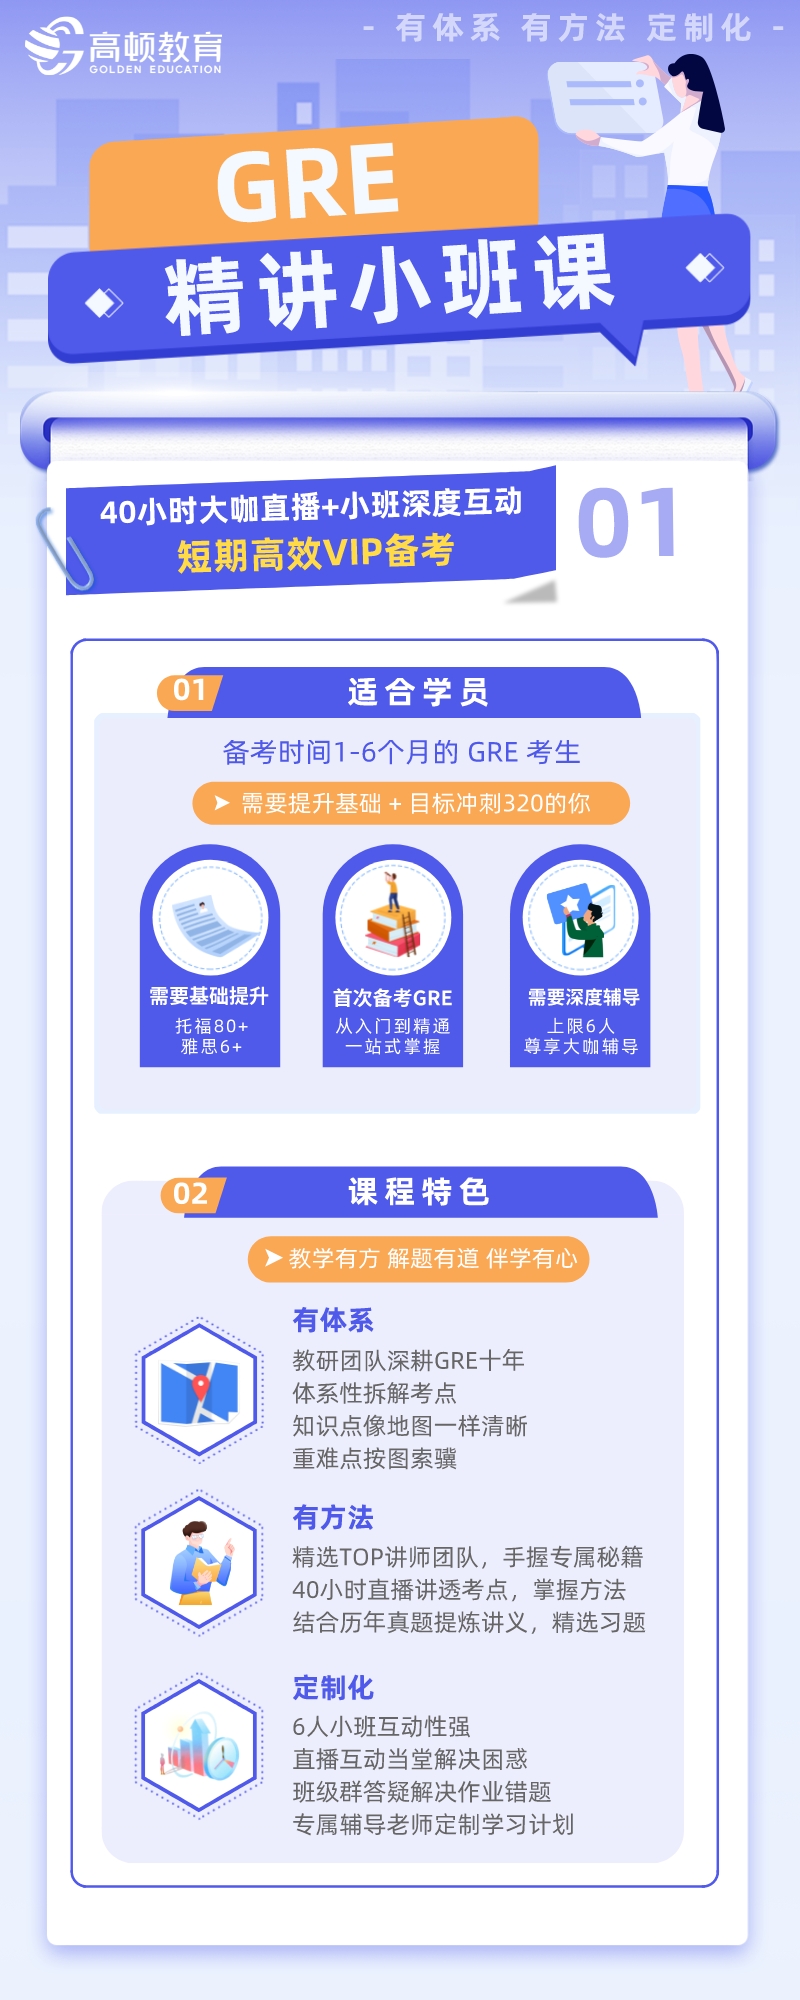 https://simg01.gaodunwangxiao.com/uploadfiles/product-center/202212/15/4c42d_20221215144804.jpeg